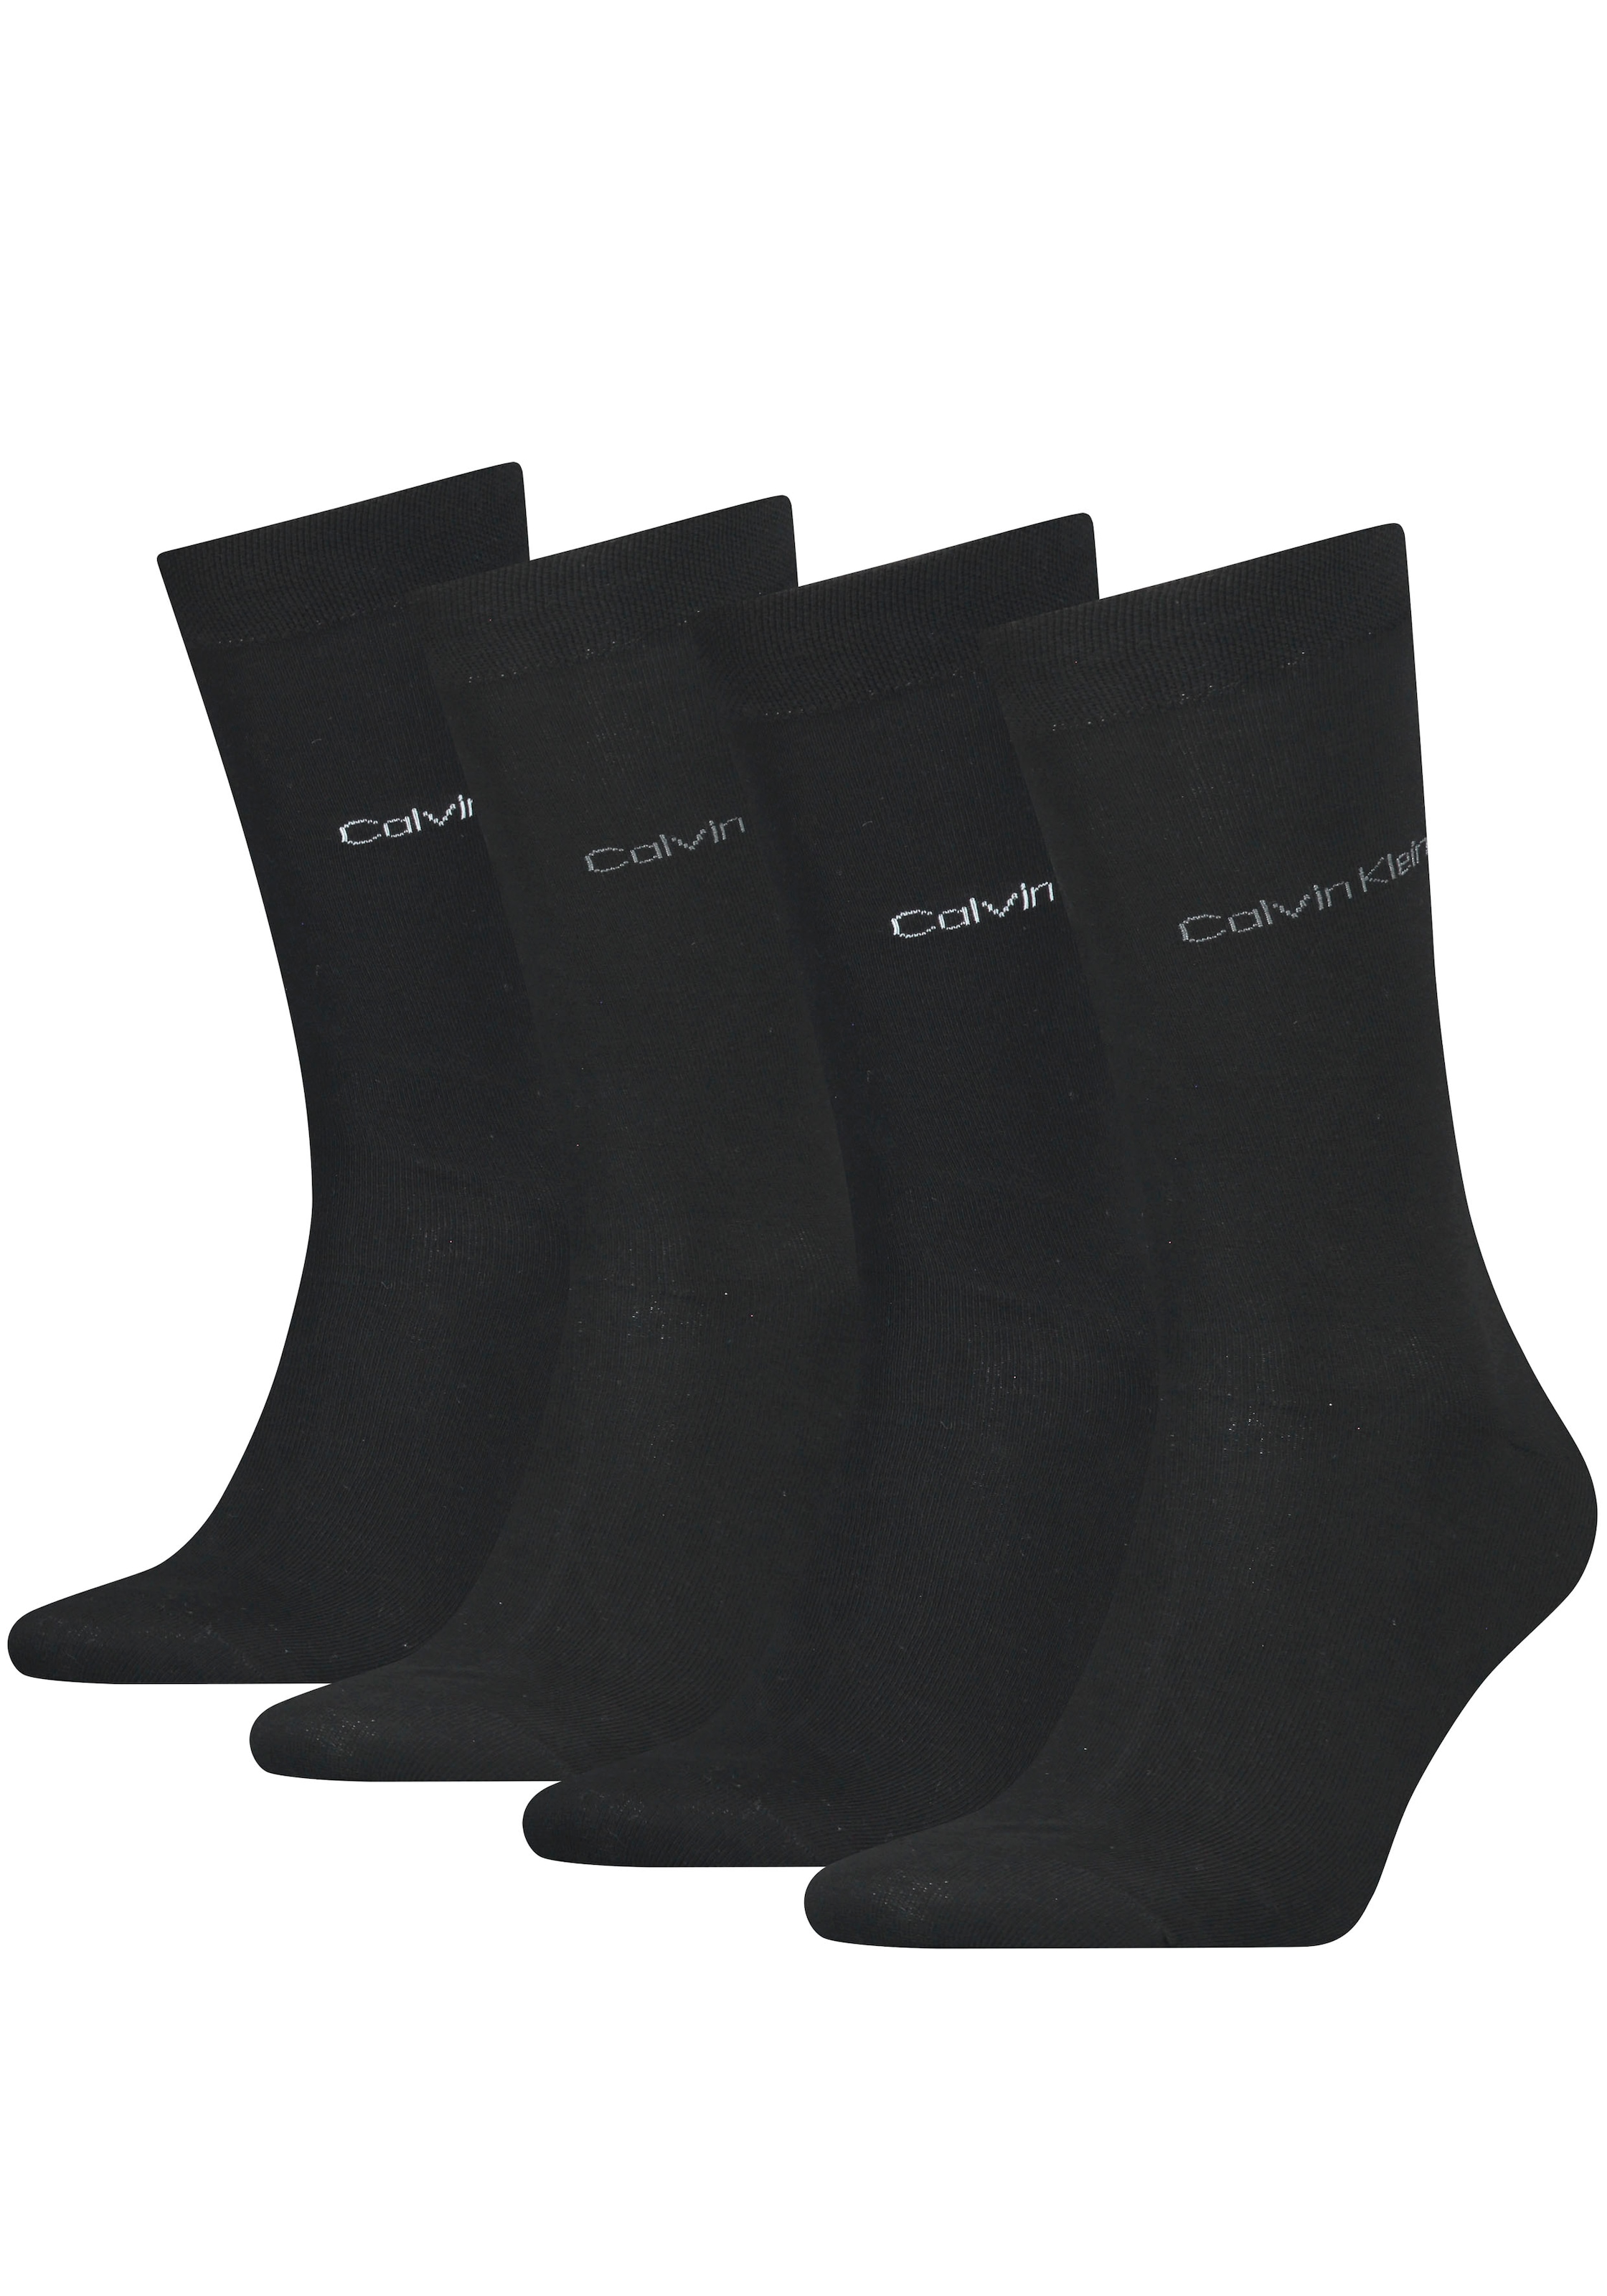 Paar), Socken, bei MEN Klein GIFTBOX kaufen Calvin (Packung, OTTO SOCK 4 CK 4P